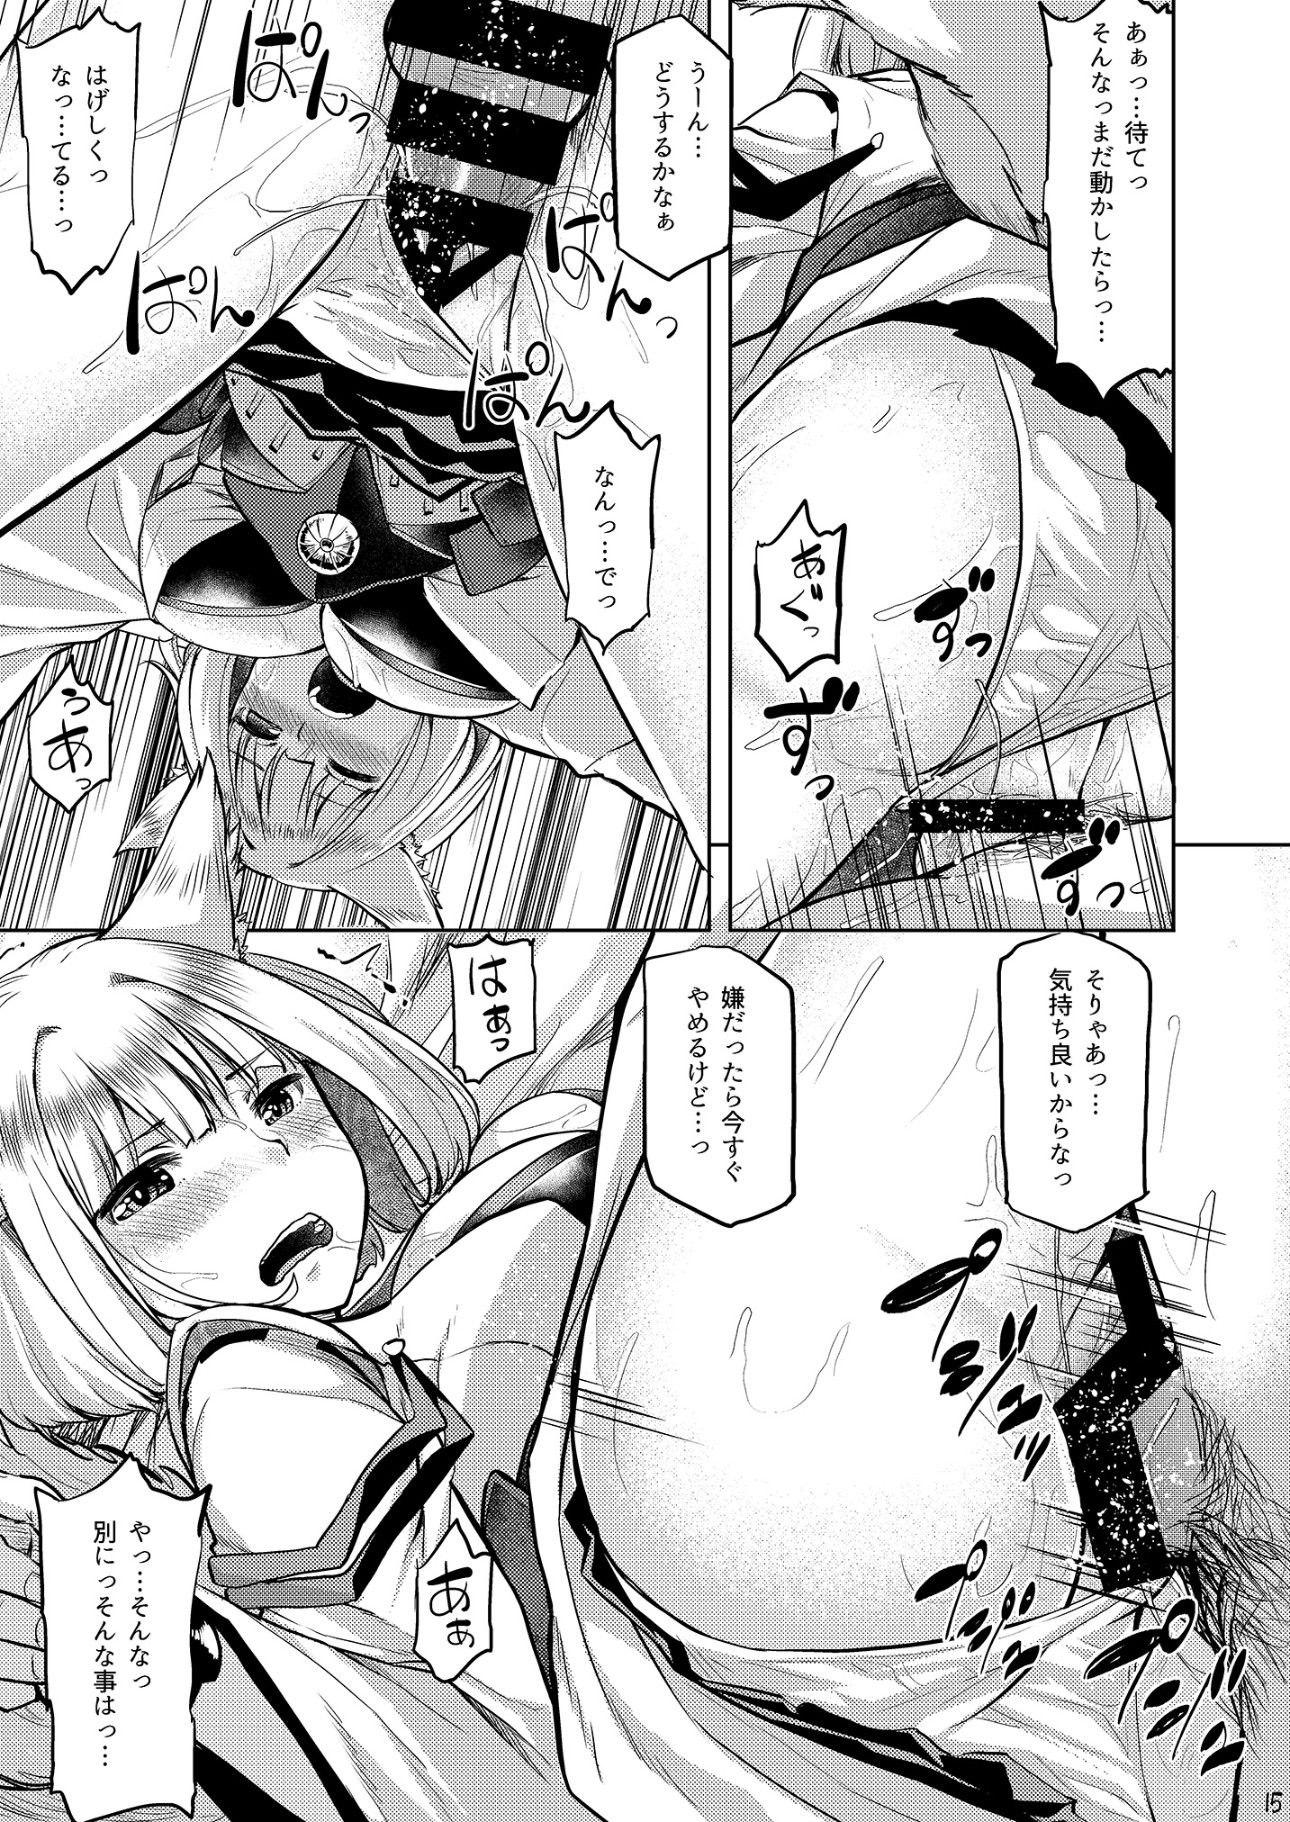 [Azur Lane] Moe of Akagi cute secondary erotic image summary 13